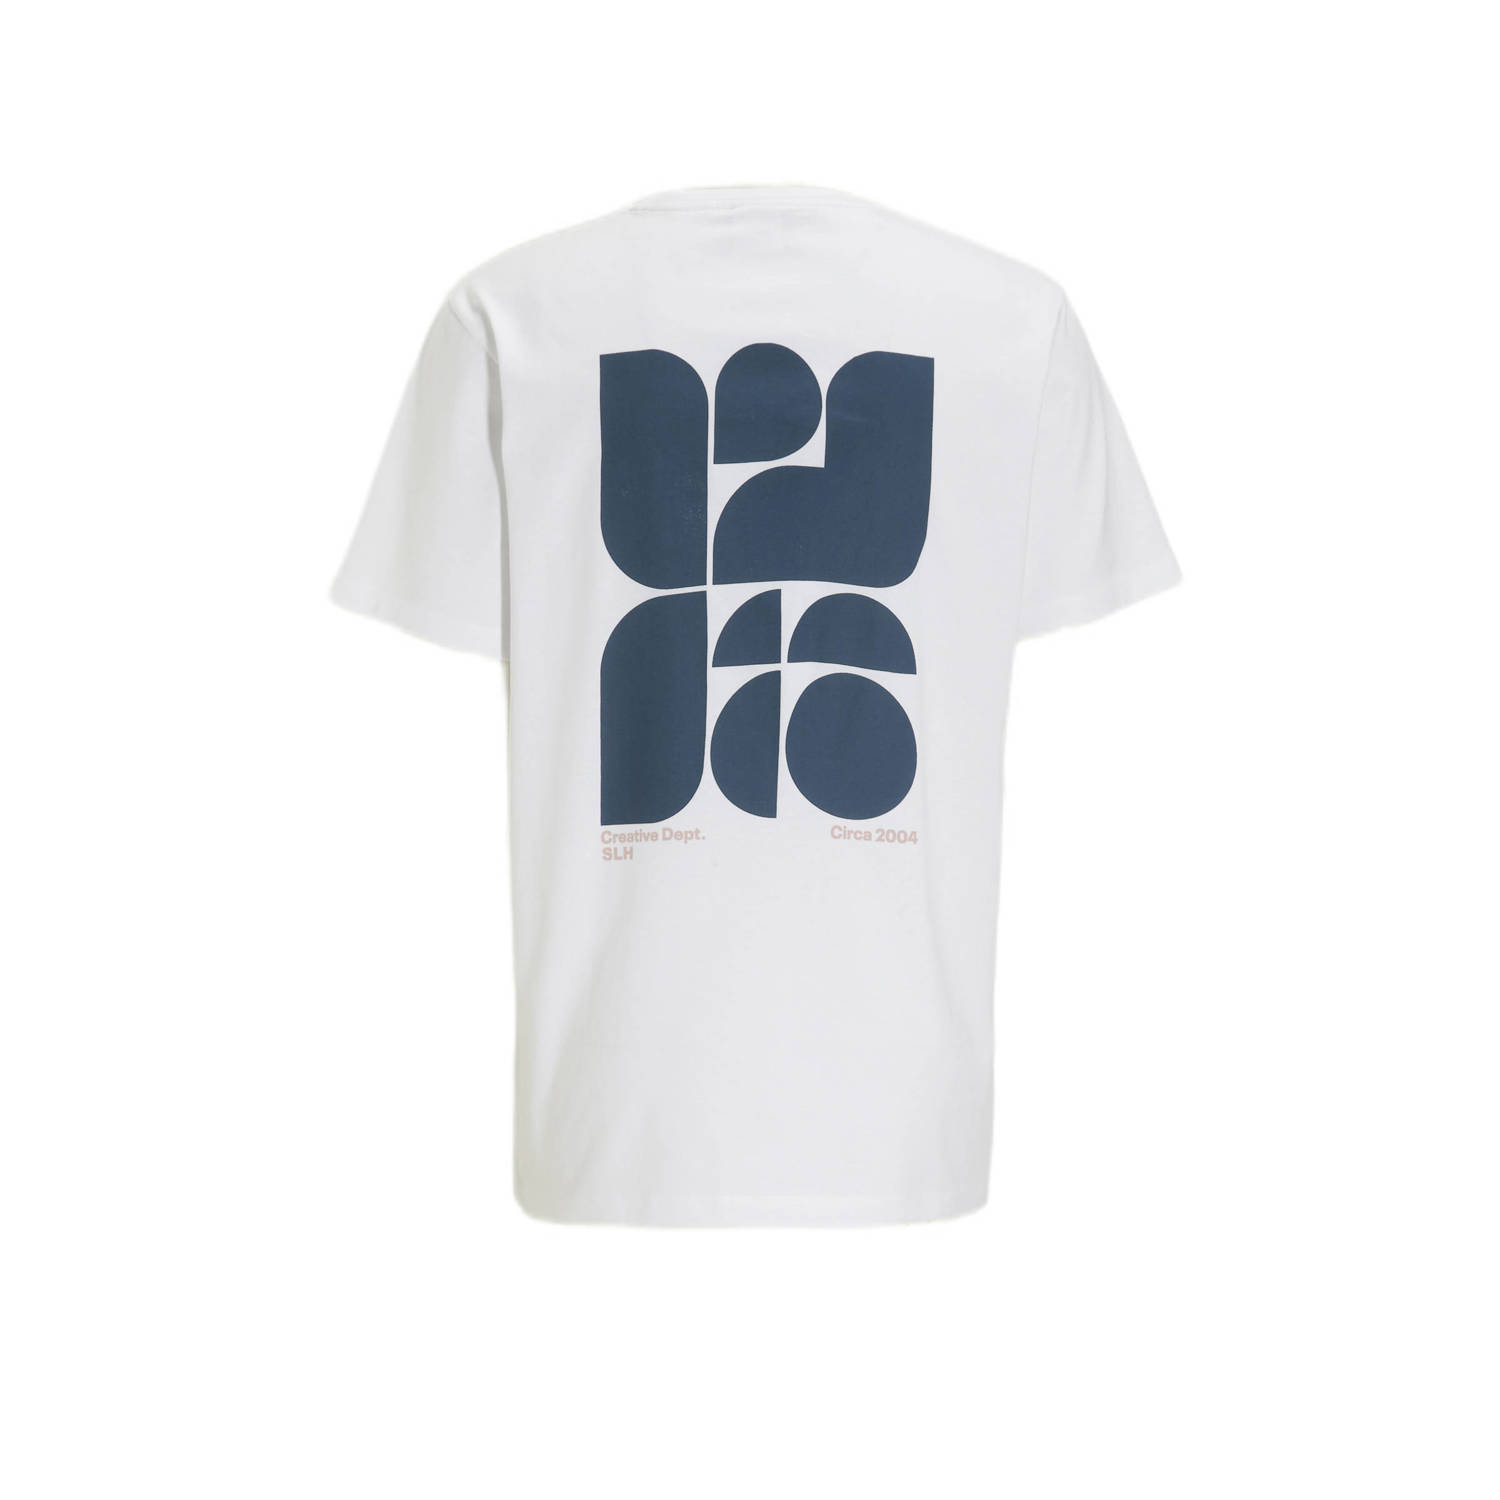 SELECTED HOMME T-shirt met backprint whiteprint:blue